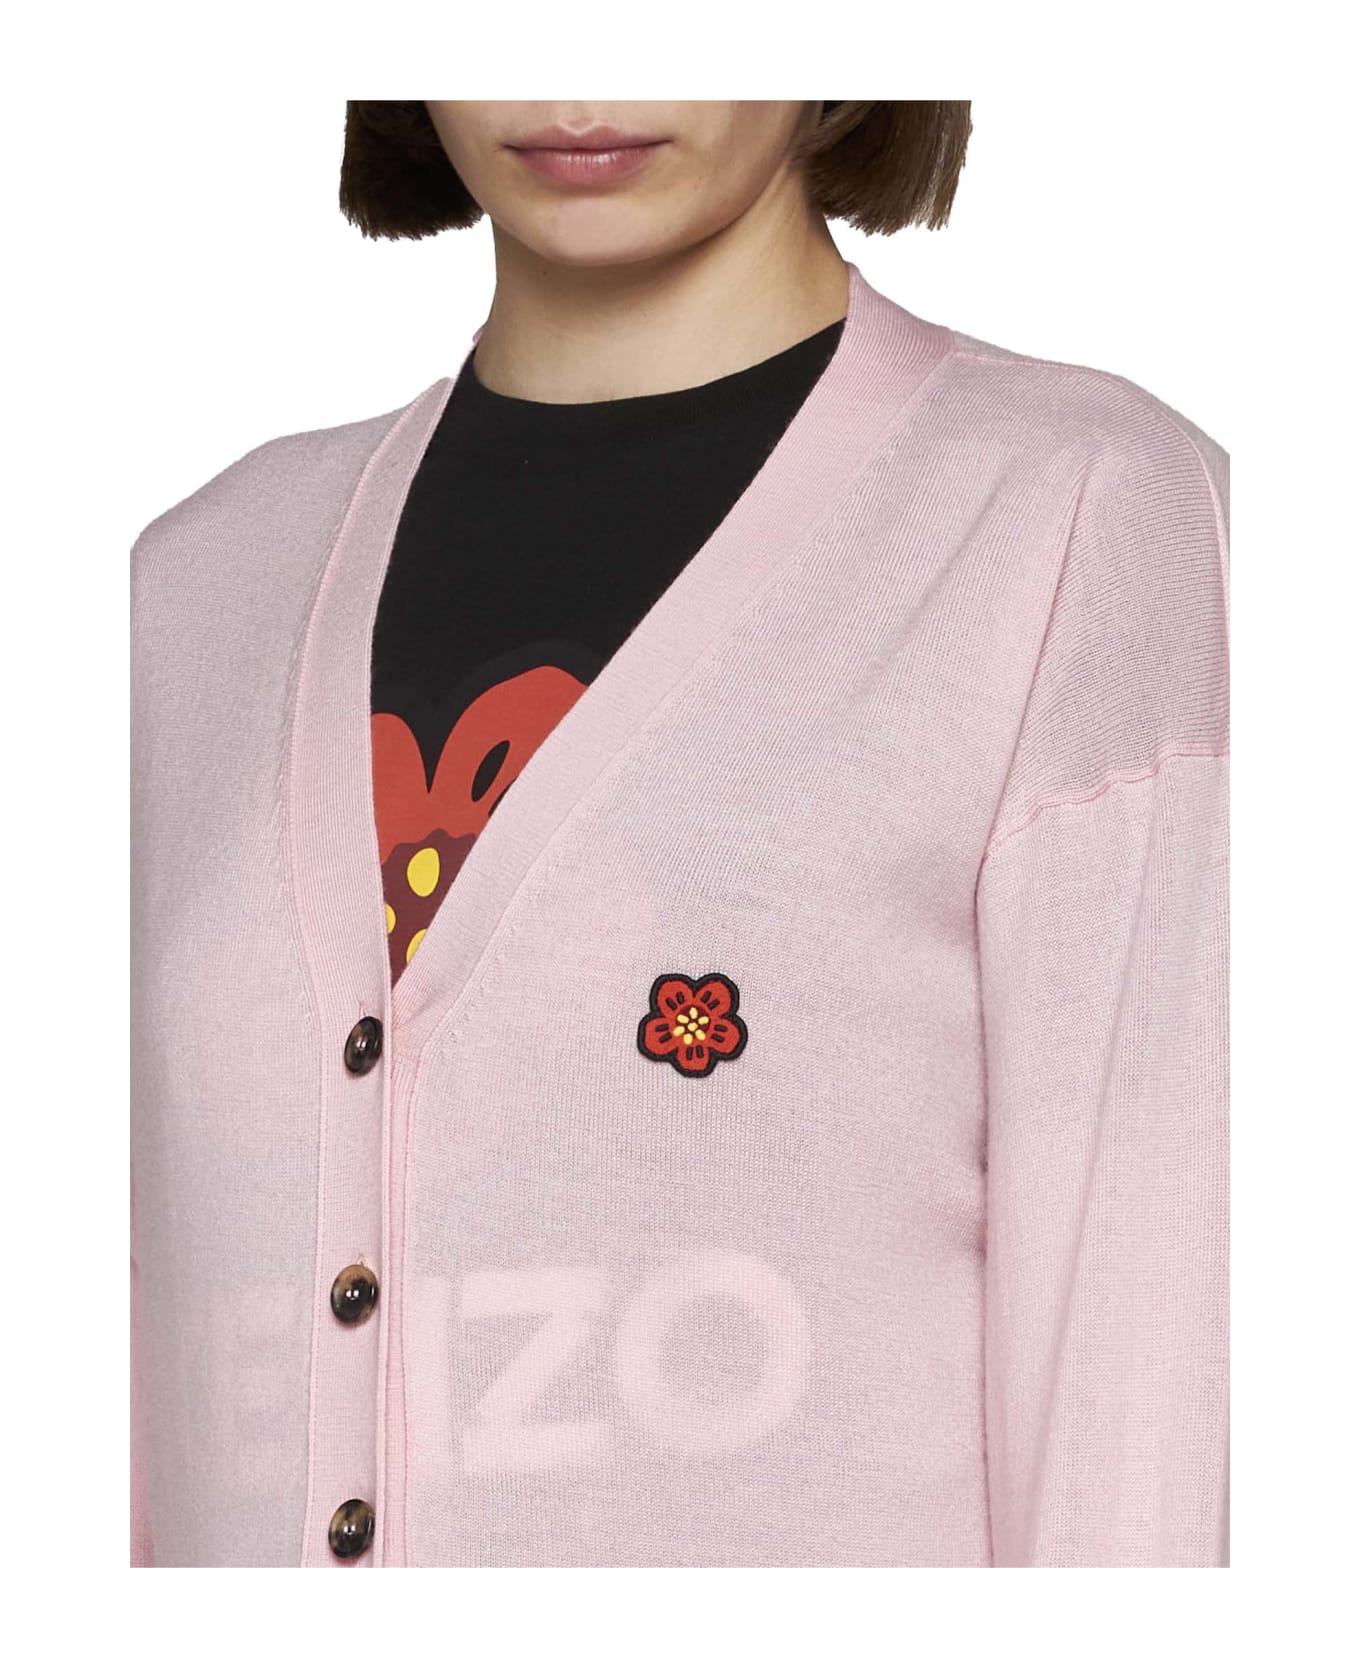 Kenzo Cardigan 'crest Logo' - Faded pink カーディガン